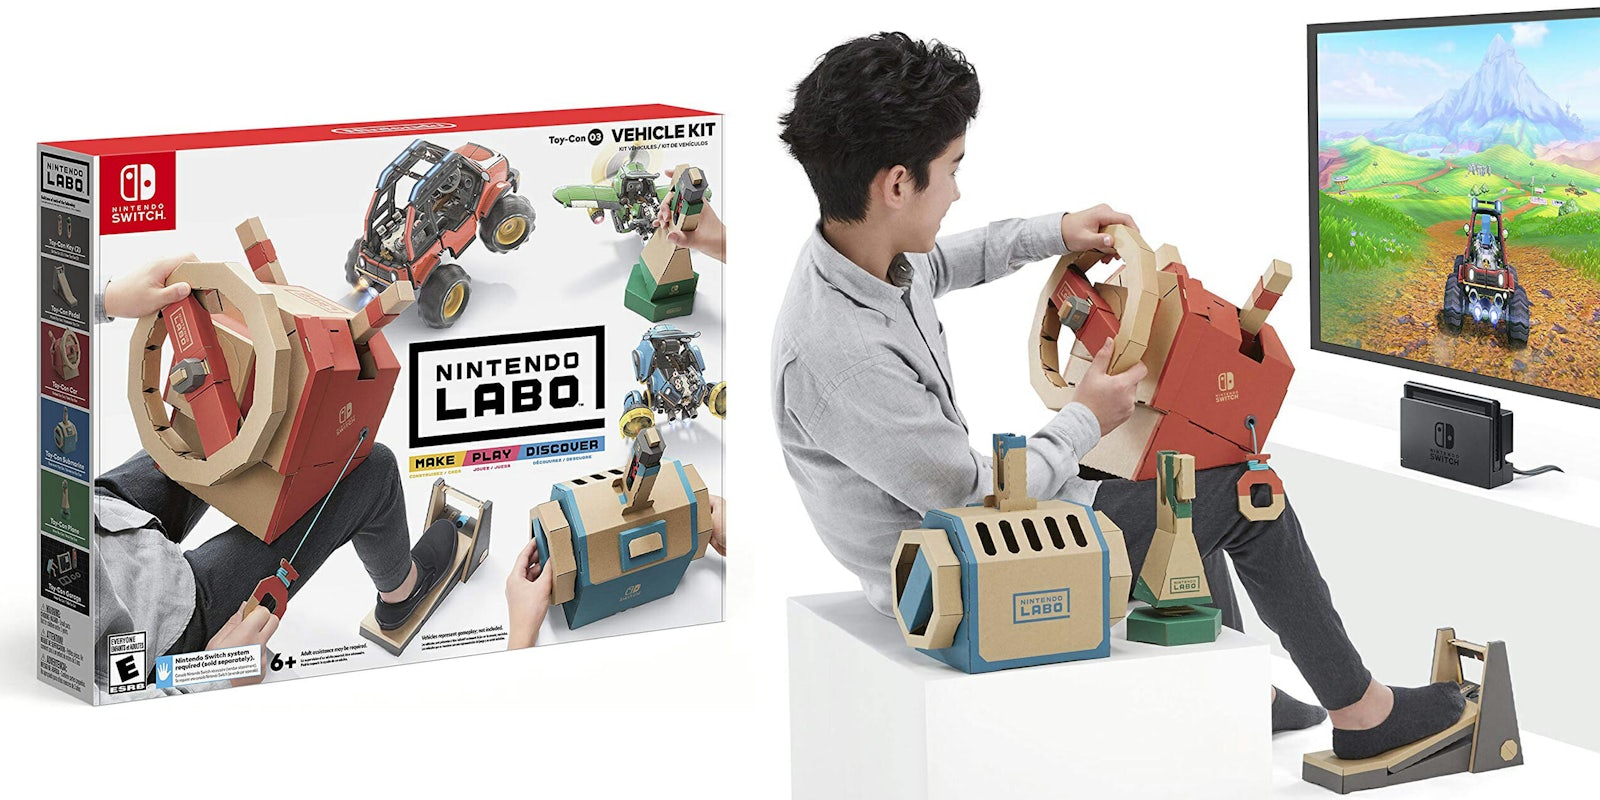 Nintendo labo vehicle kit